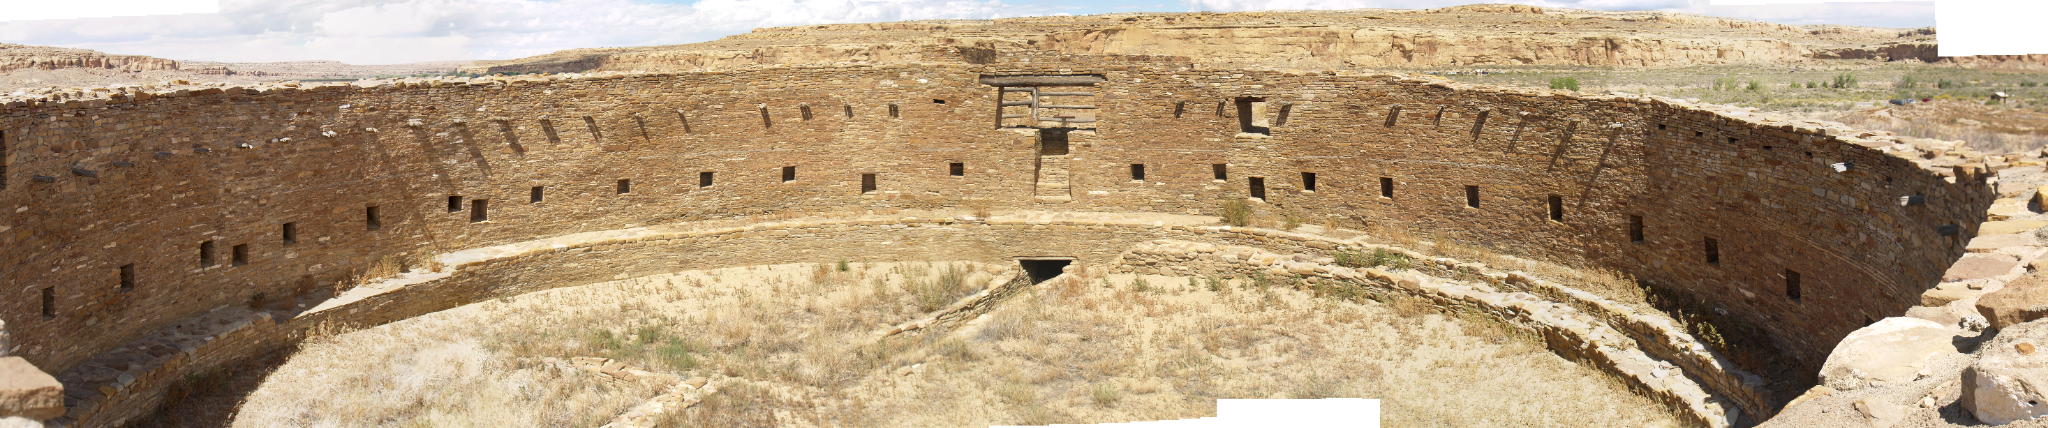 Image of Kiva of Casa Rinconada by Puebloan Maker(s) from Chaco Canyon